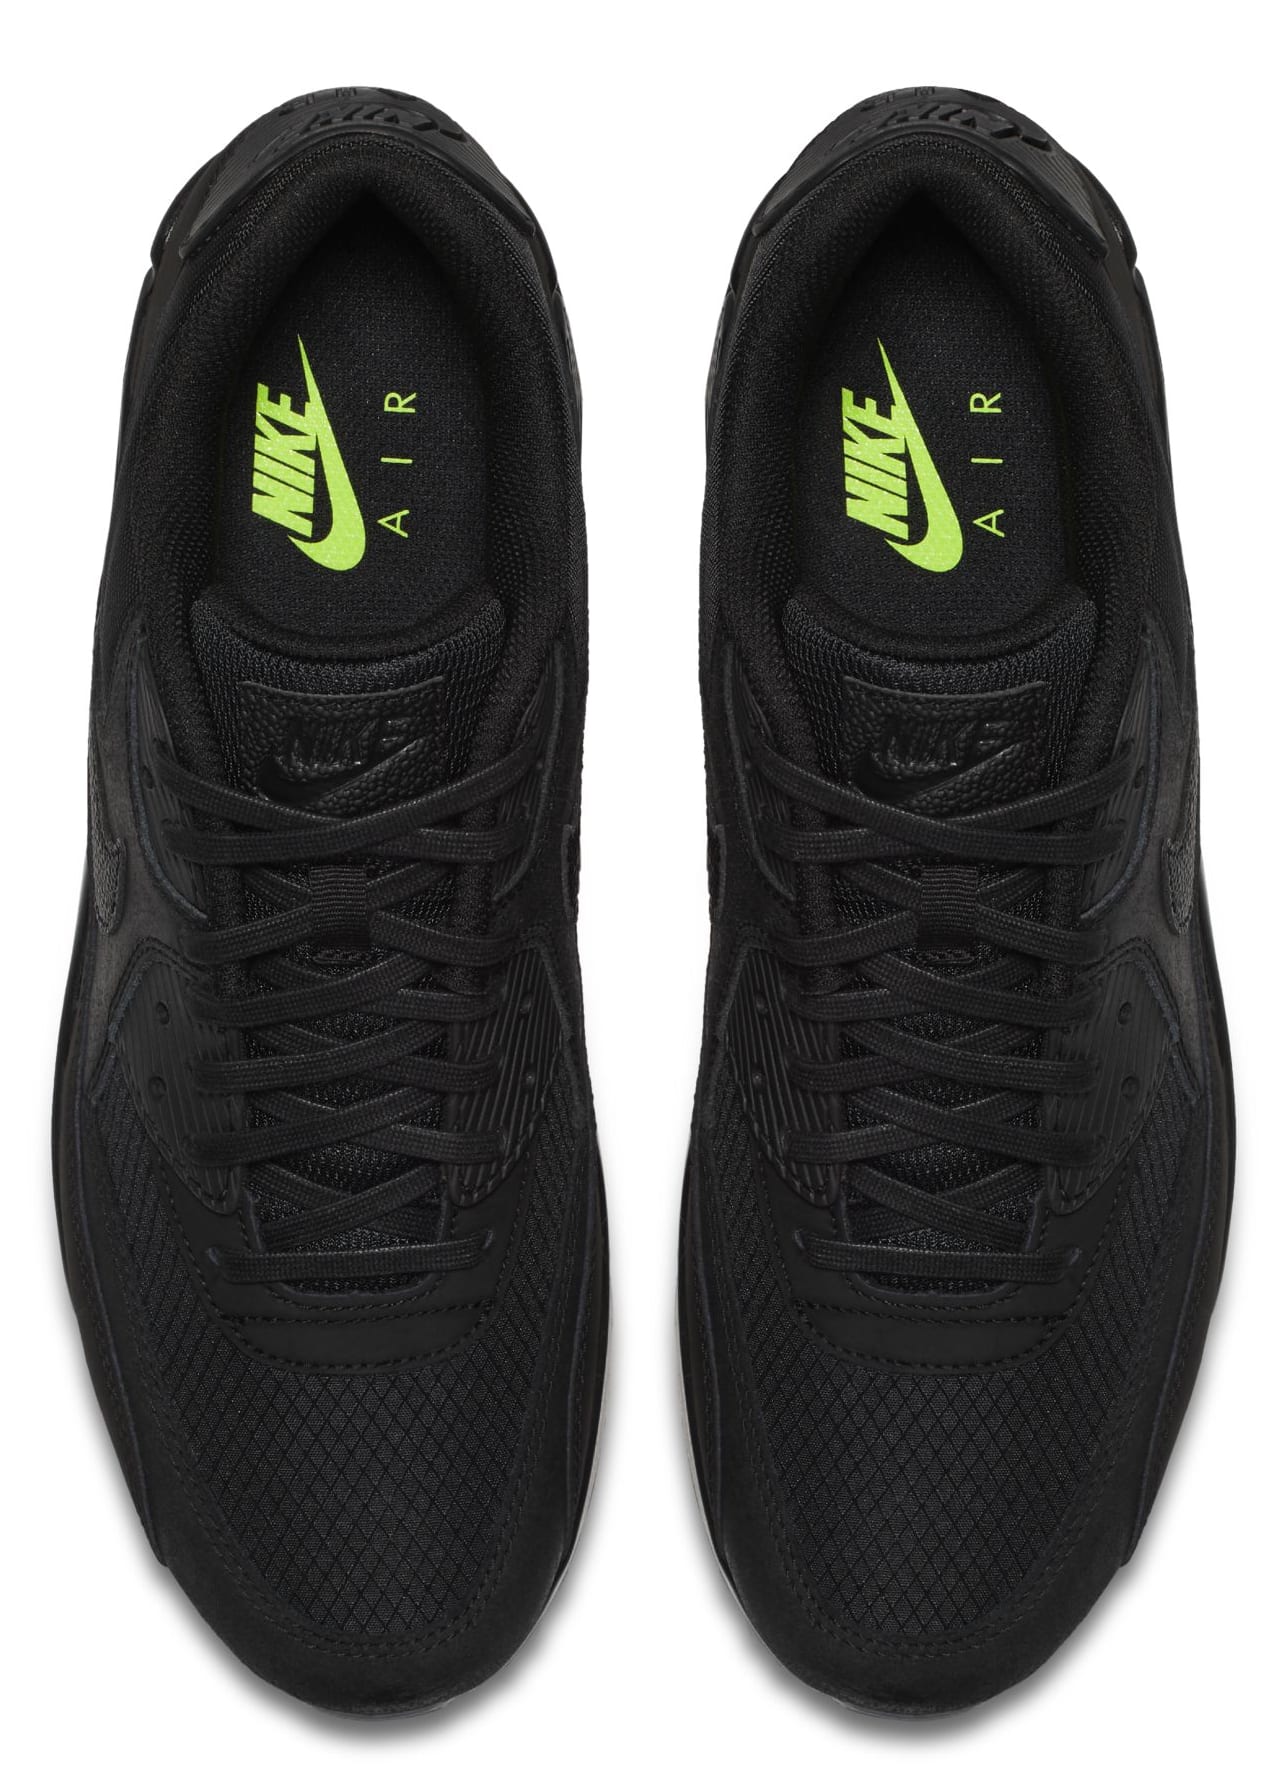 Nike Air Max 90 Black/Black-Volt AQ6101-001 Release Date | Sole Collector